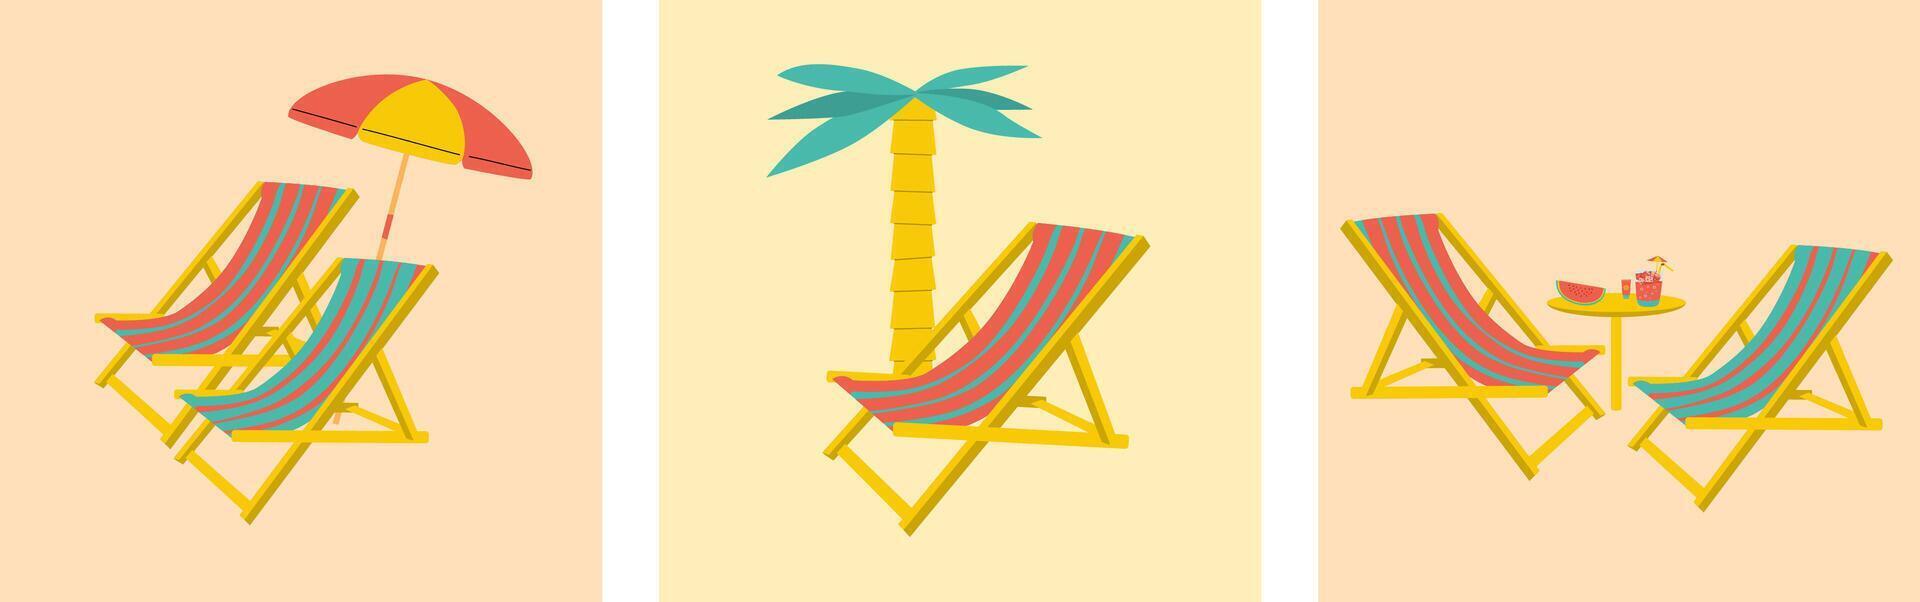 Deckchair and umbrella on the beach. illustration vector